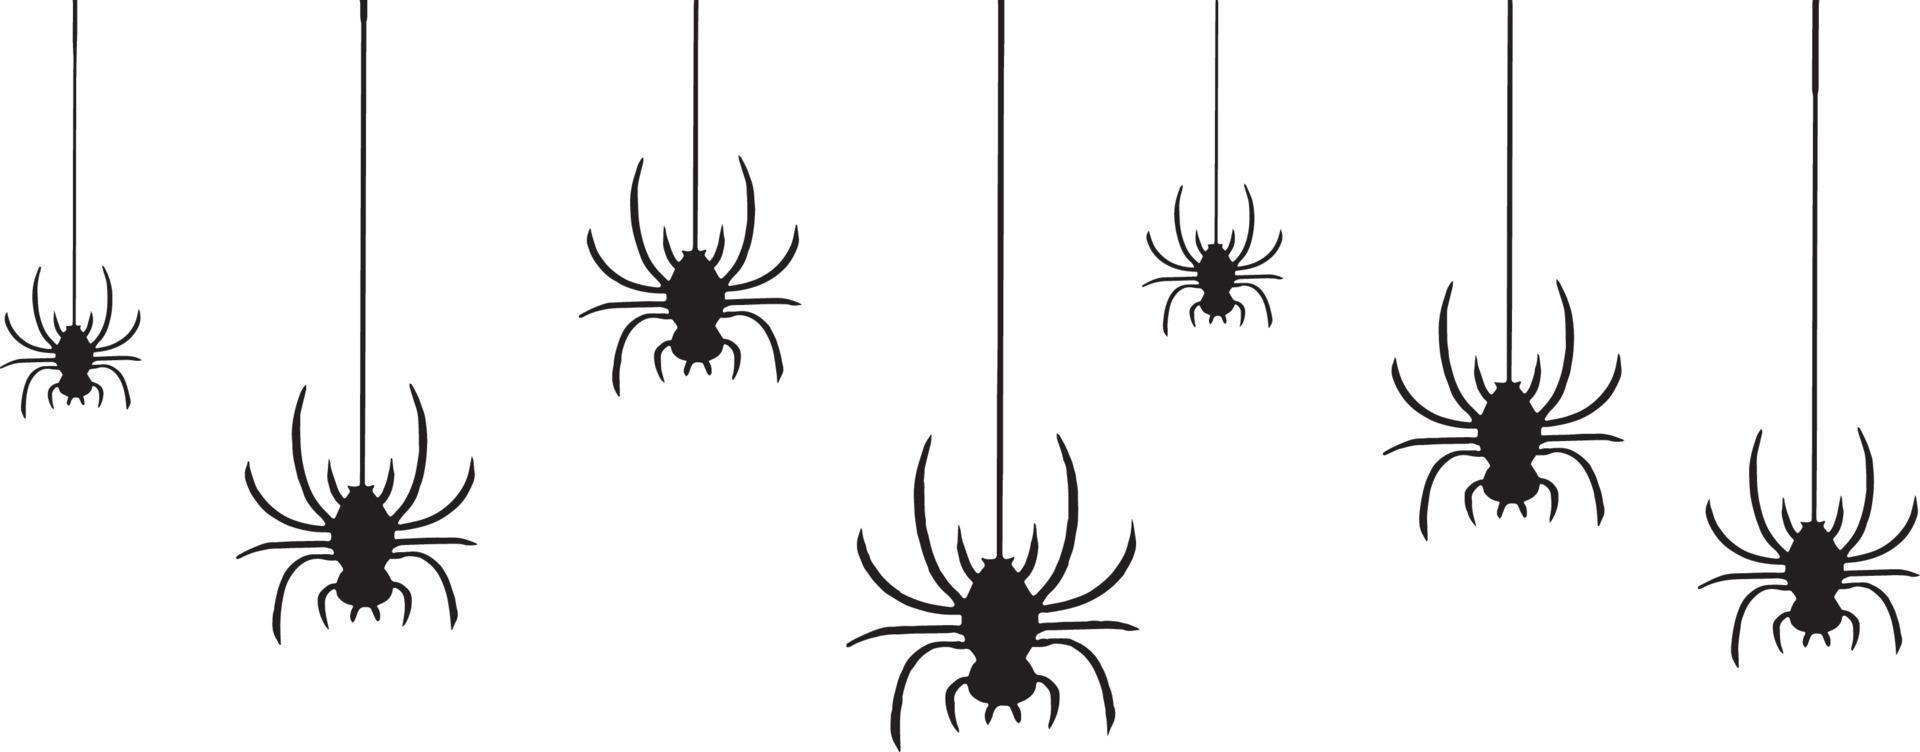 araignées d'halloween tombant avec un fond blanc vecteur